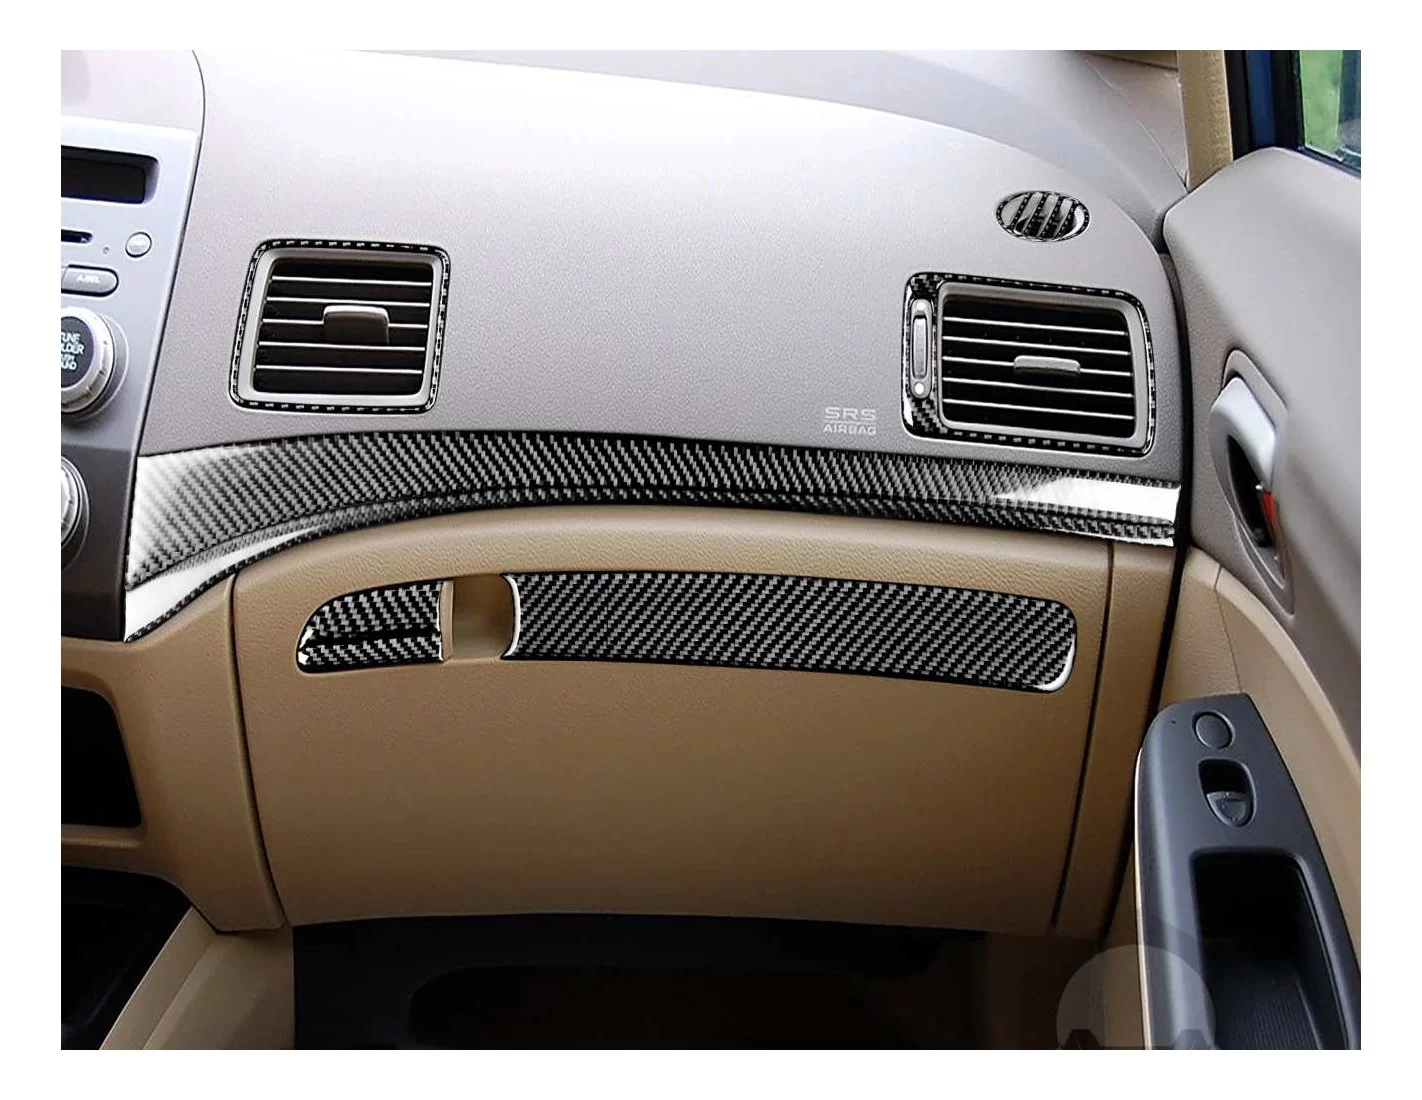 Honda Civic 2006-2011 2 Doors, Without NAVI system BD Interieur Dashboard Bekleding Volhouder